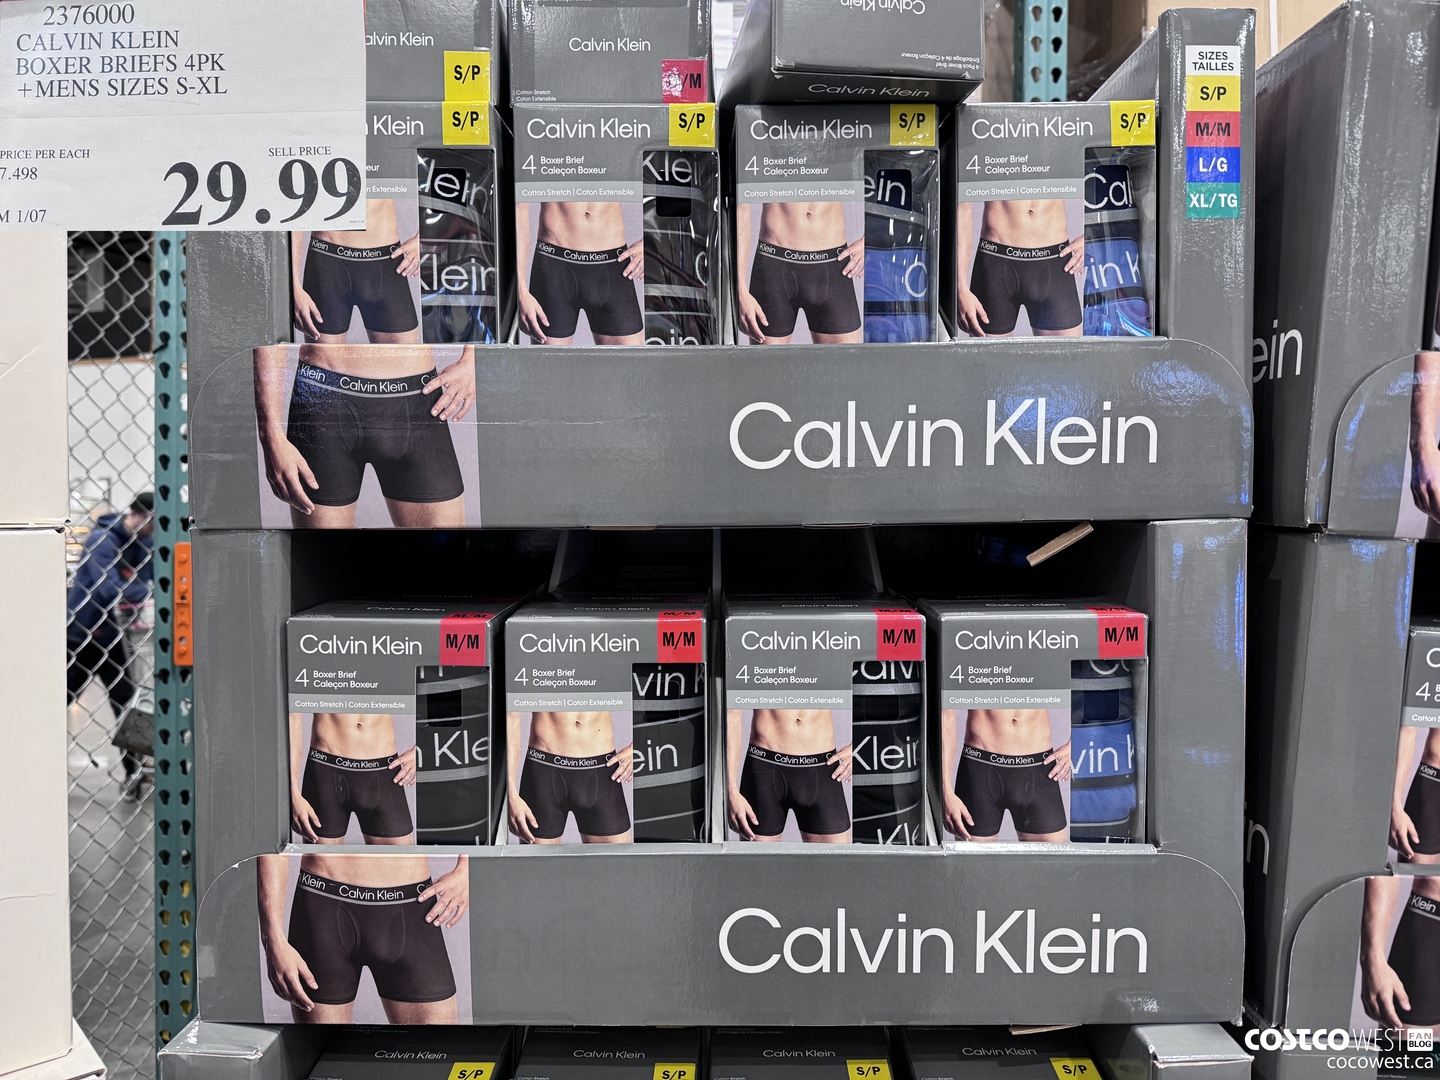 COSTCO FIND: Calvin Klein Spring Trench Coat - Got it tonight